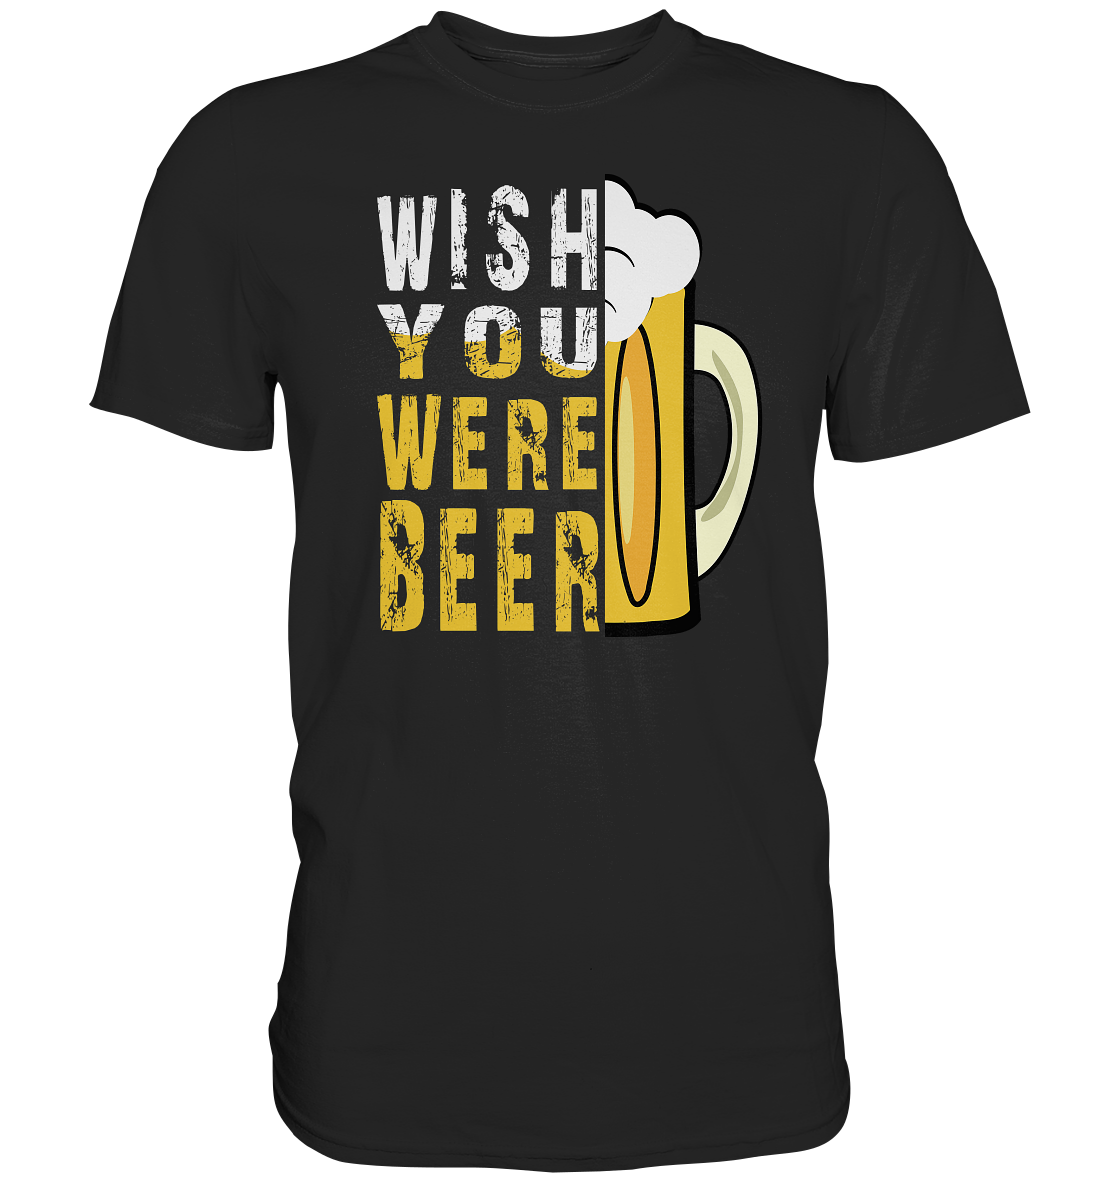 "Wish you were Beer" - Premium Shirt